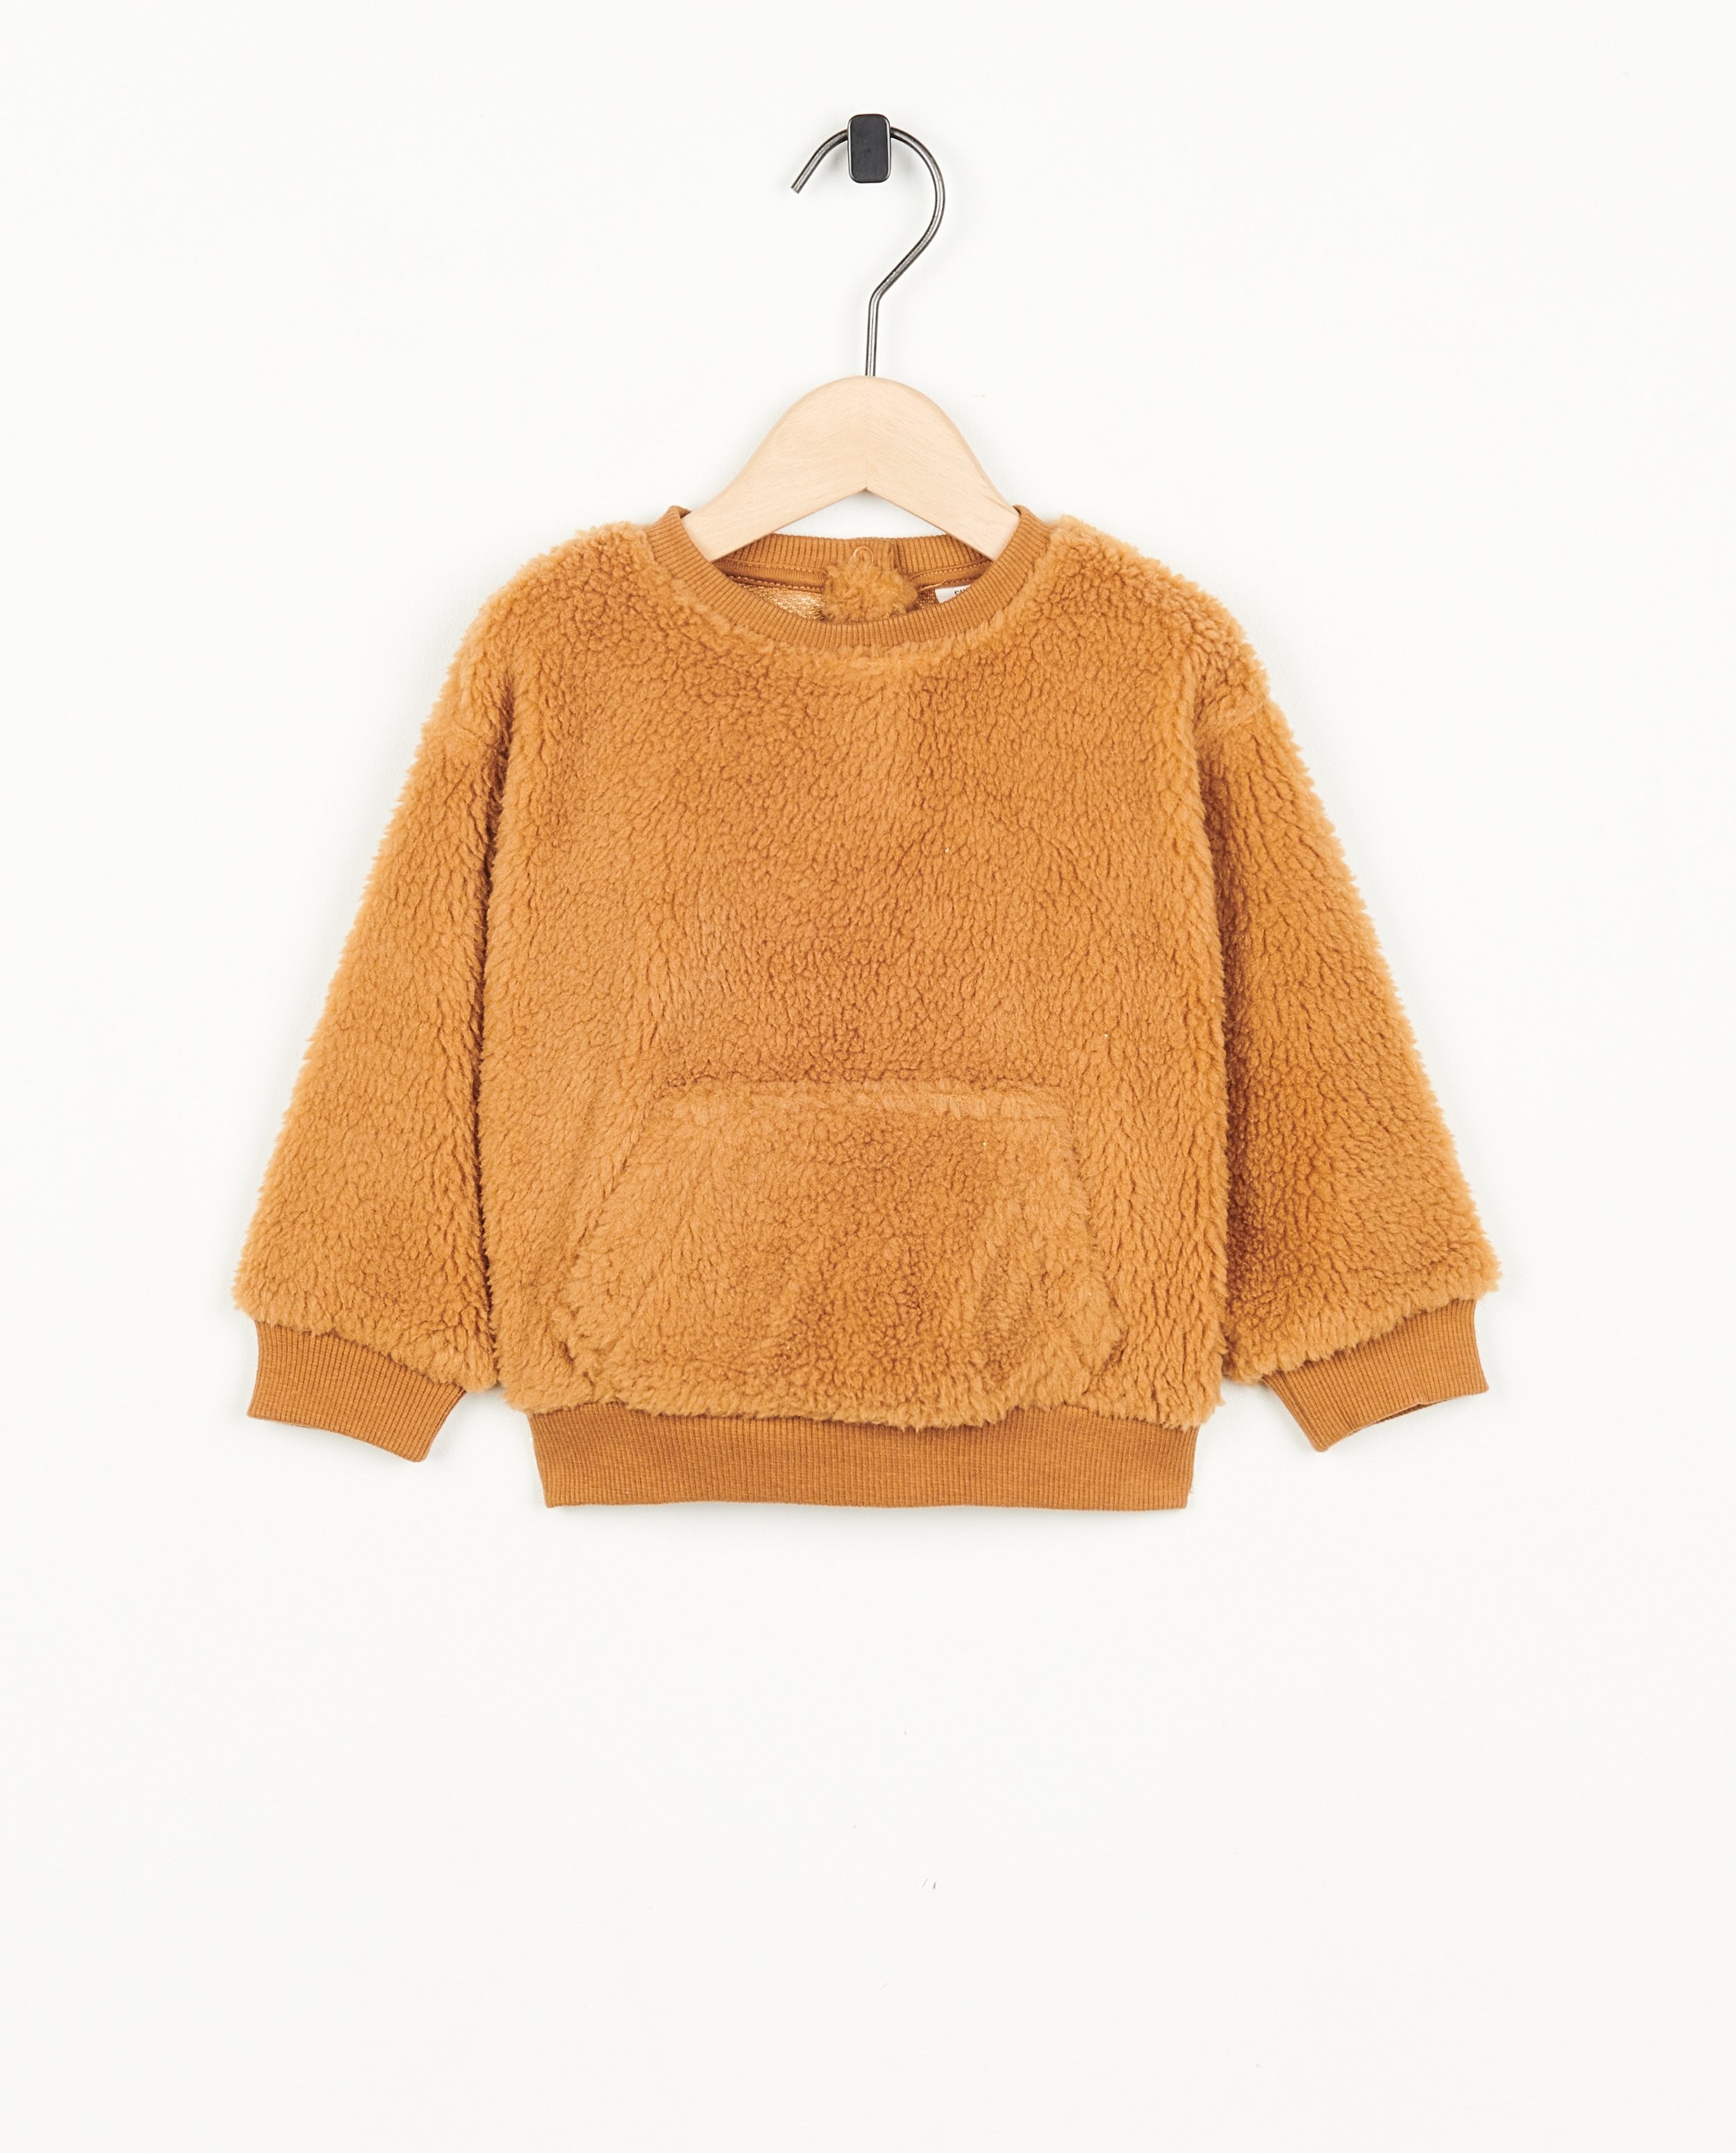 Bruine sweater van teddy - null - Cuddles and Smiles